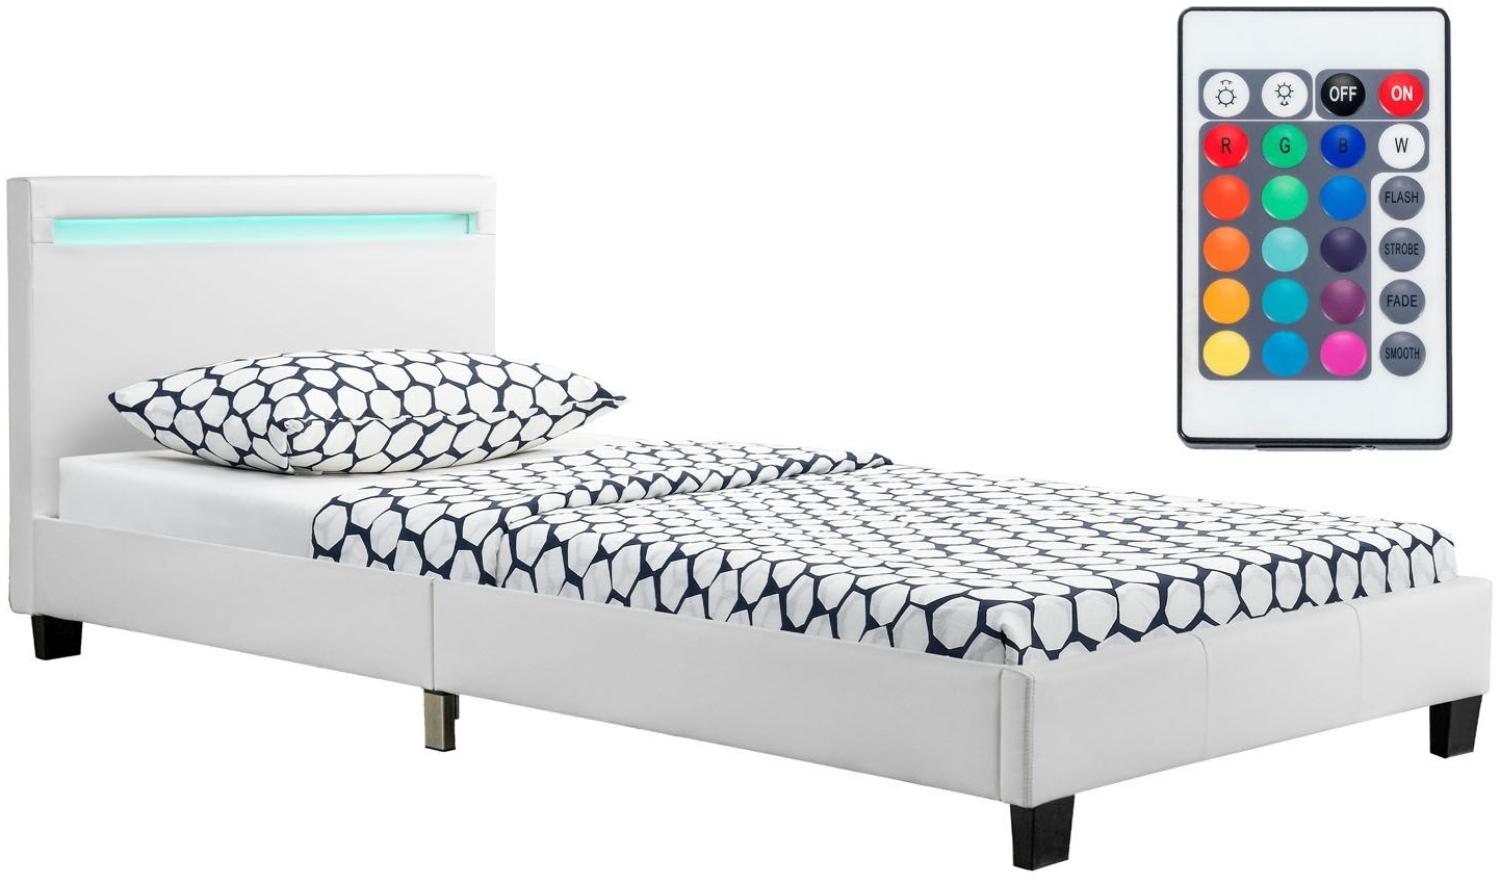 Juskys Polsterbett Verona 90 x 200 cm weiß – Bettgestell inkl. LED-Beleuchtung, Lattenrost & Kopfteil – Bett mit Holzgestell & Kunstleder-Bezug Bild 1